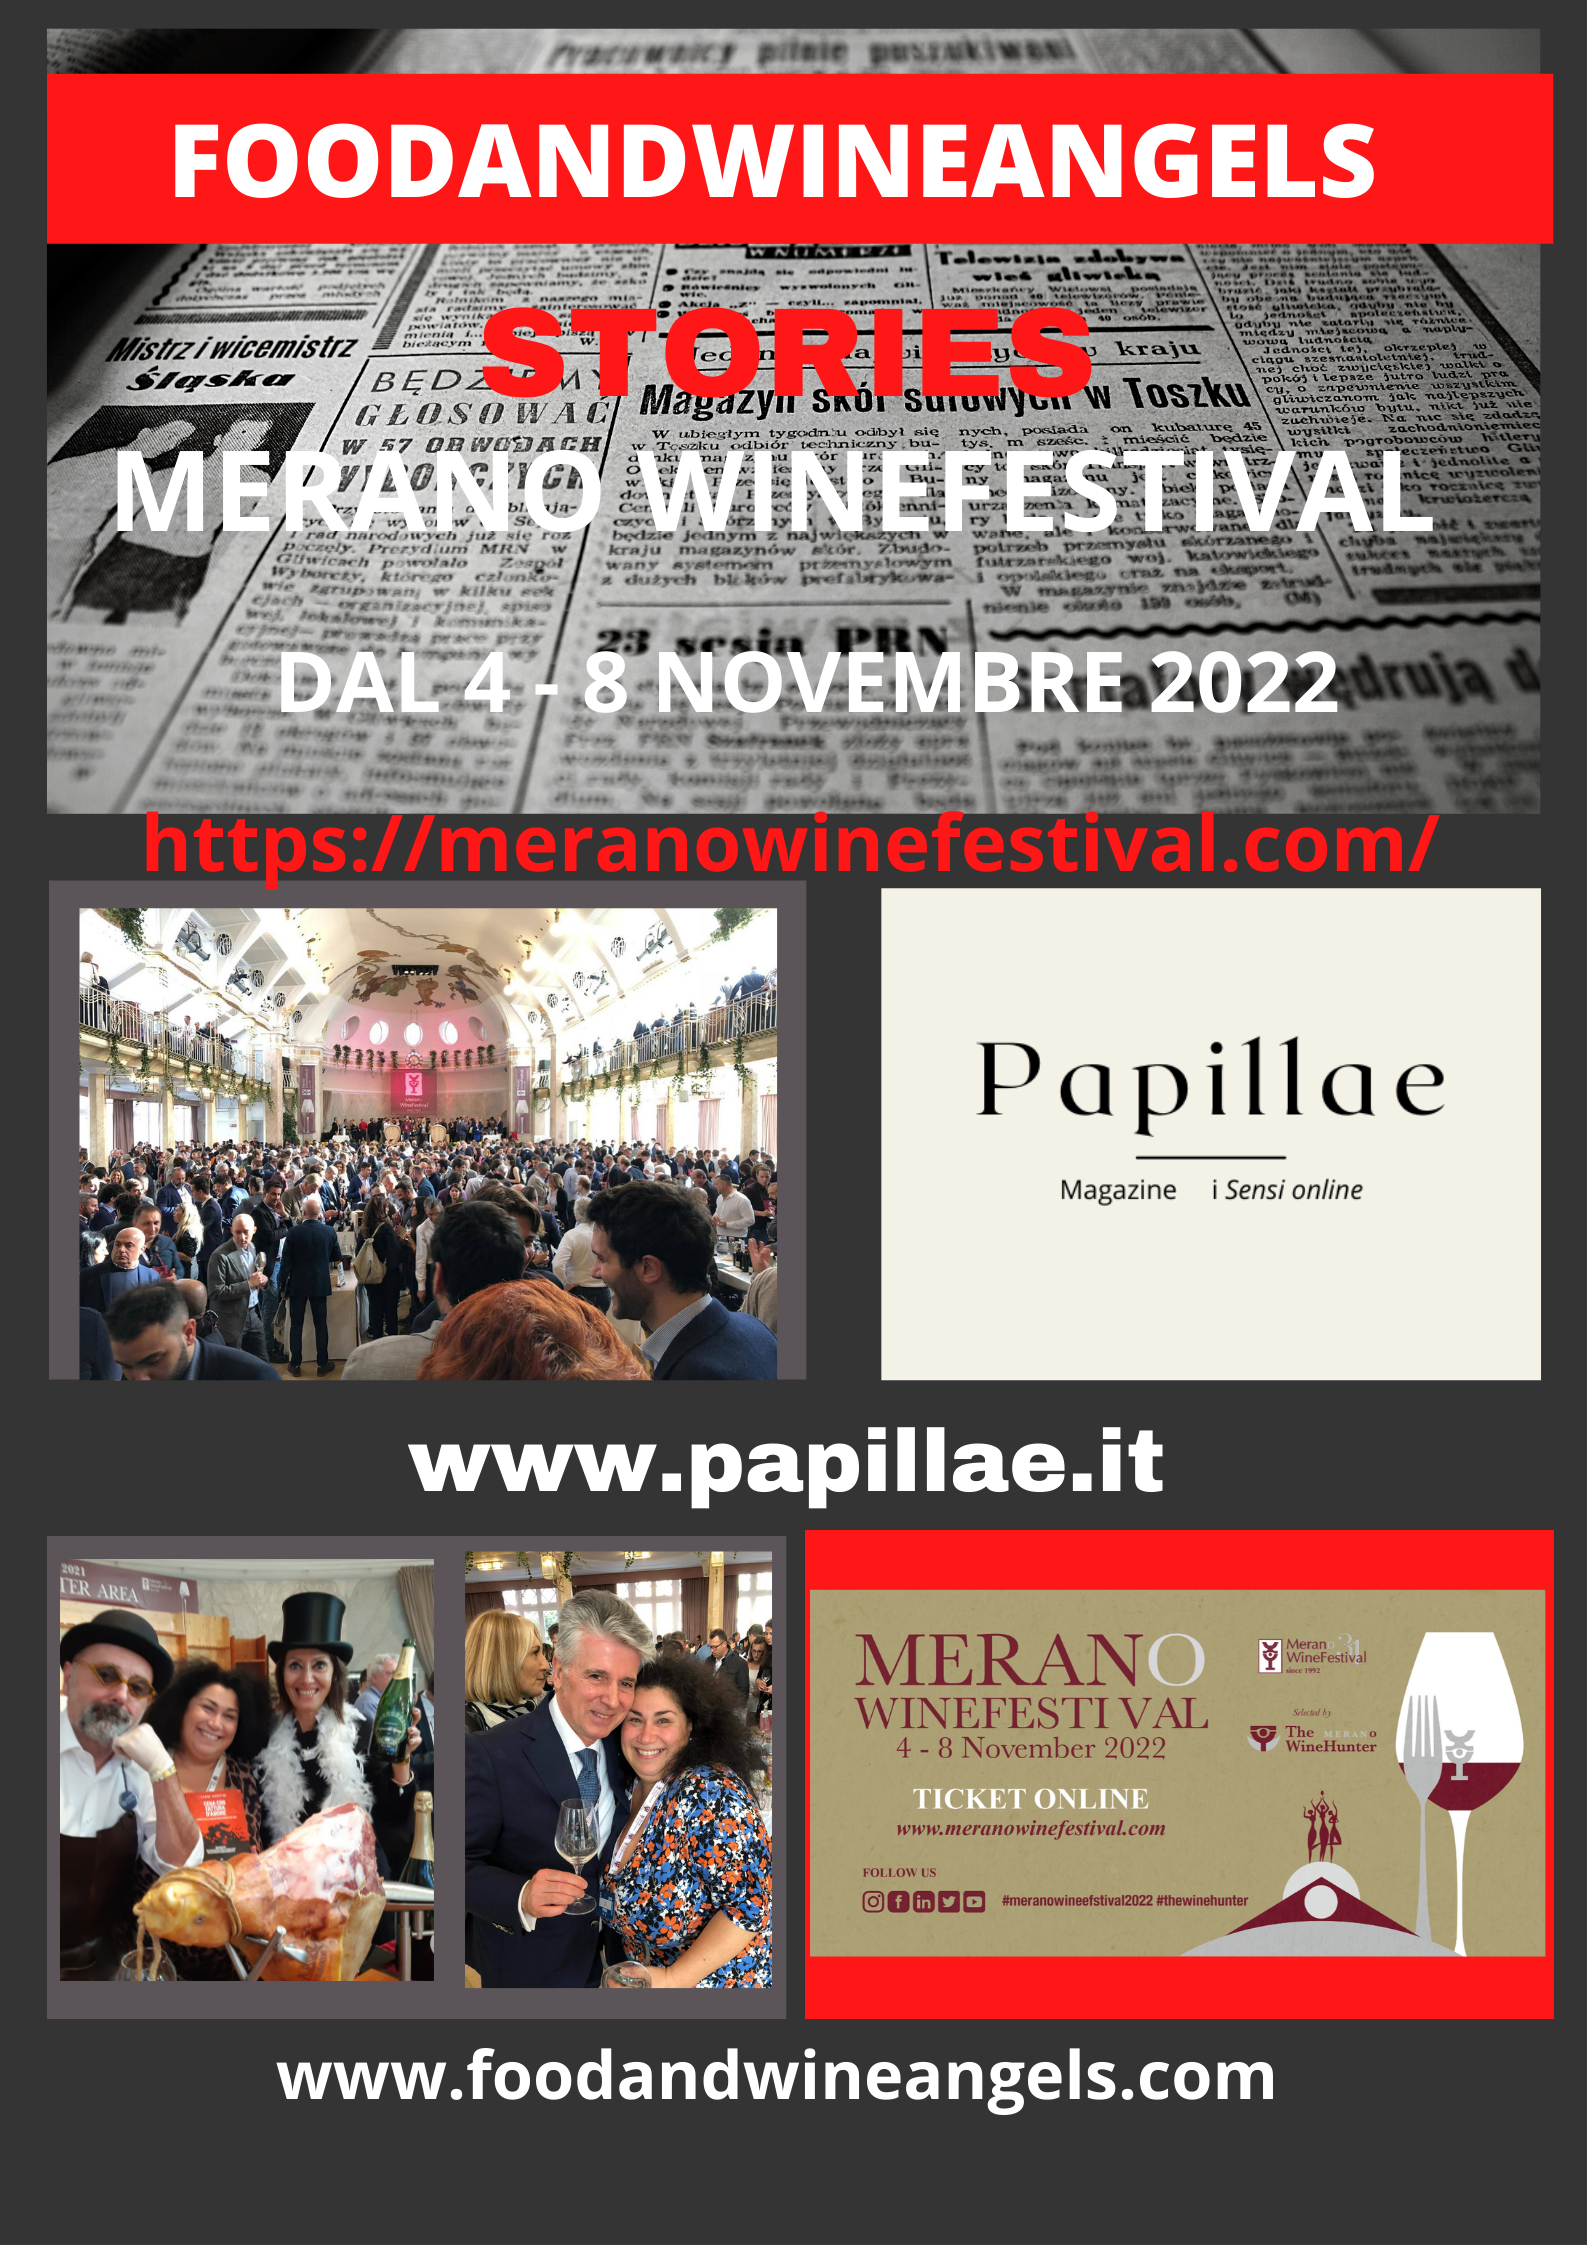 Copertina Manifestazione Merano Winefestival 2022